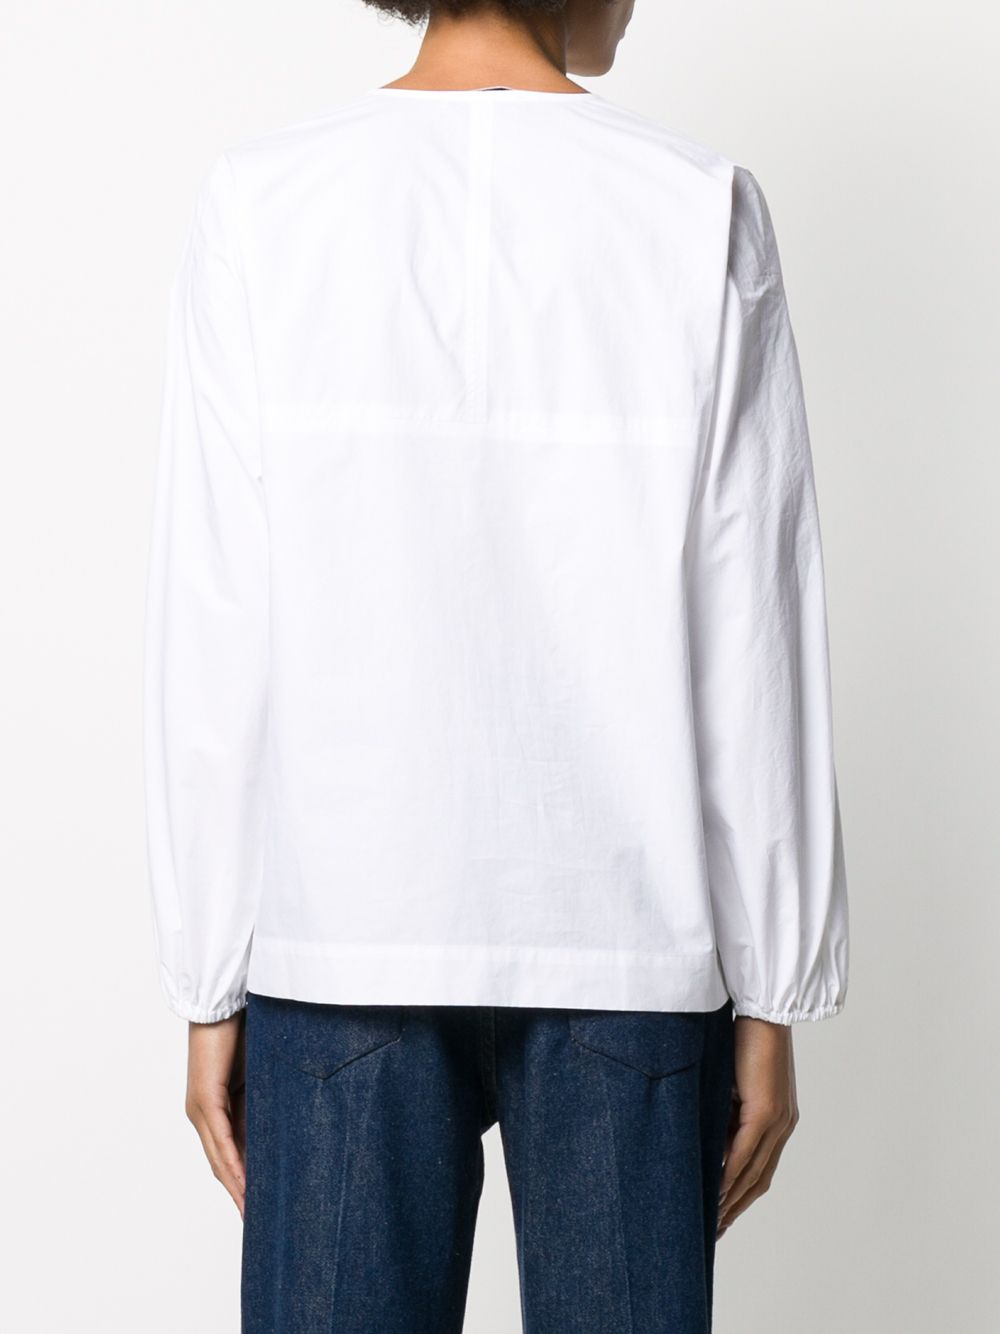 фото Odeeh рубашка с эластичными манжетами и разрезом спереди